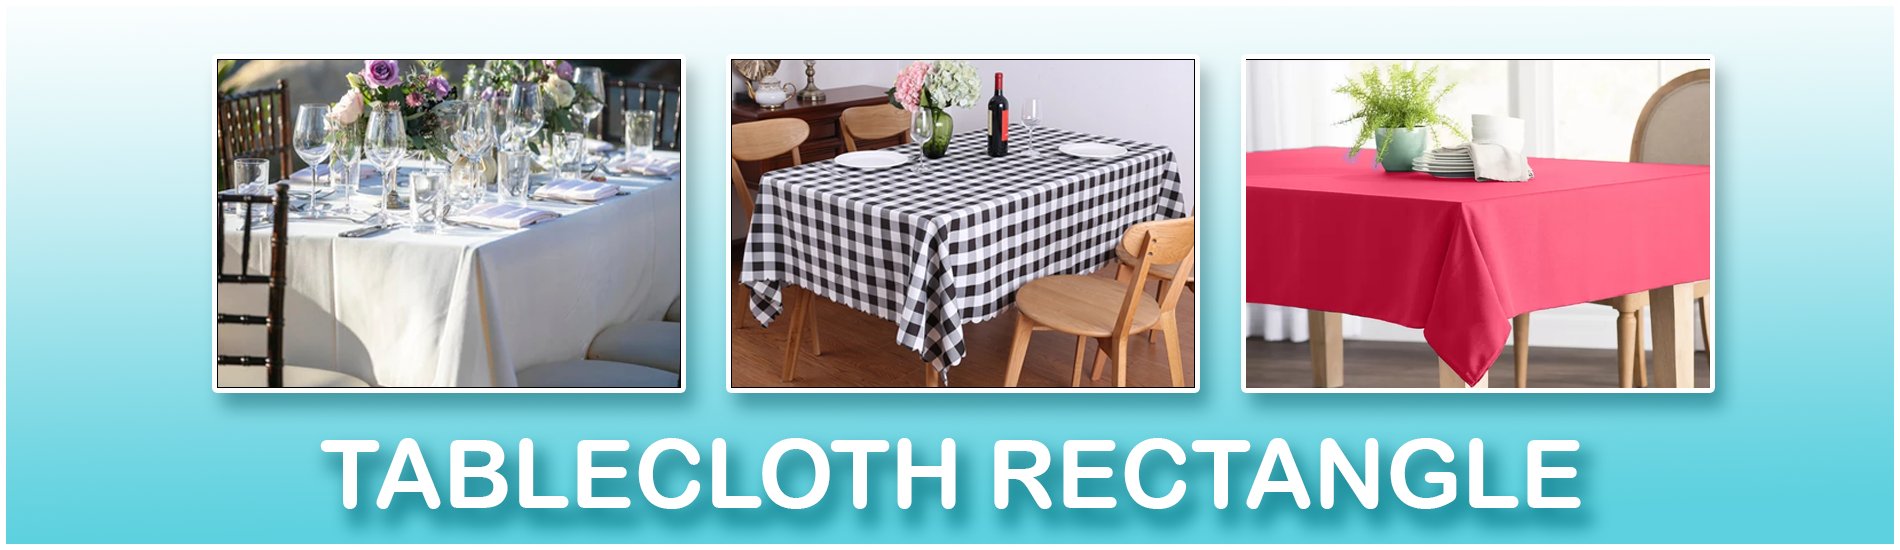 Tablecloths Rectangle